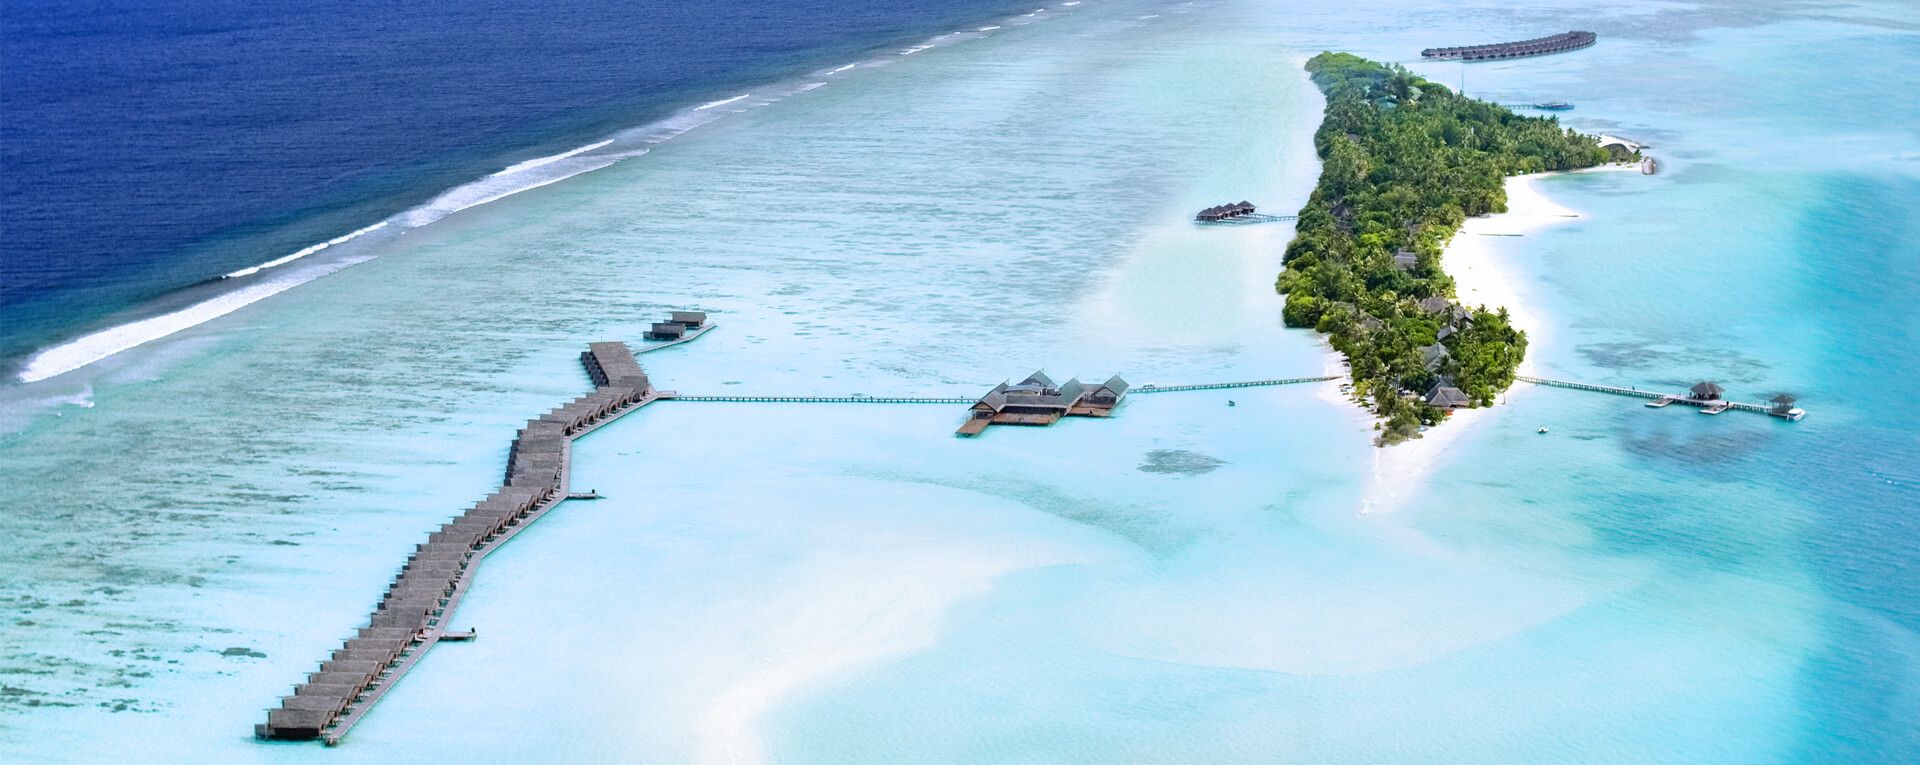 LUX* South Ari Atoll Resort & Villas, Maldives